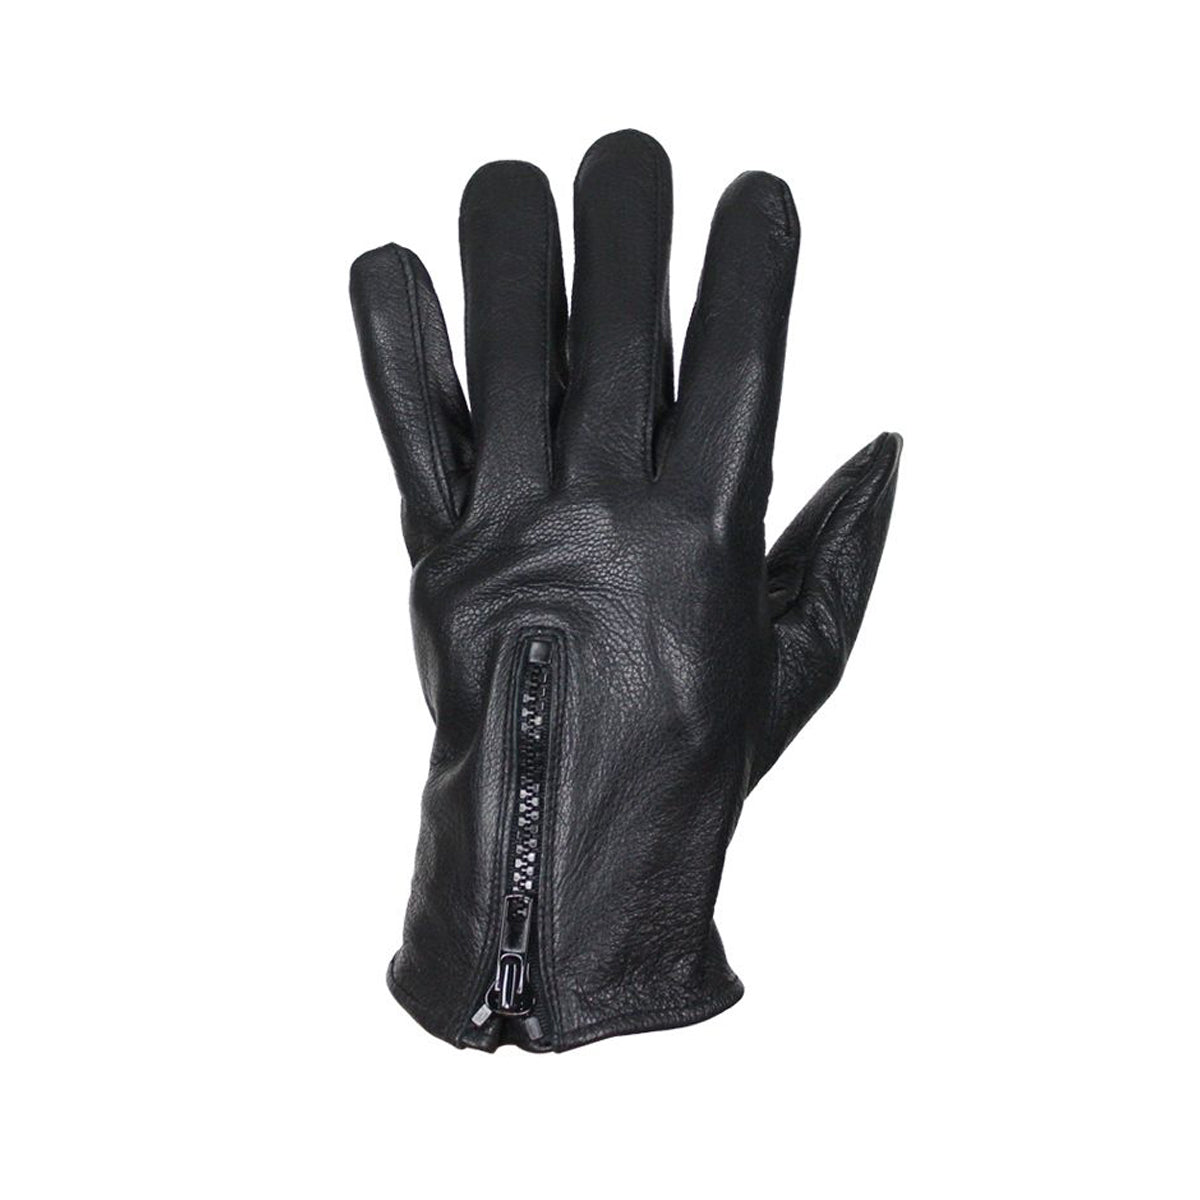 Deer Skin Leather Gloves W/ Zipper - Black